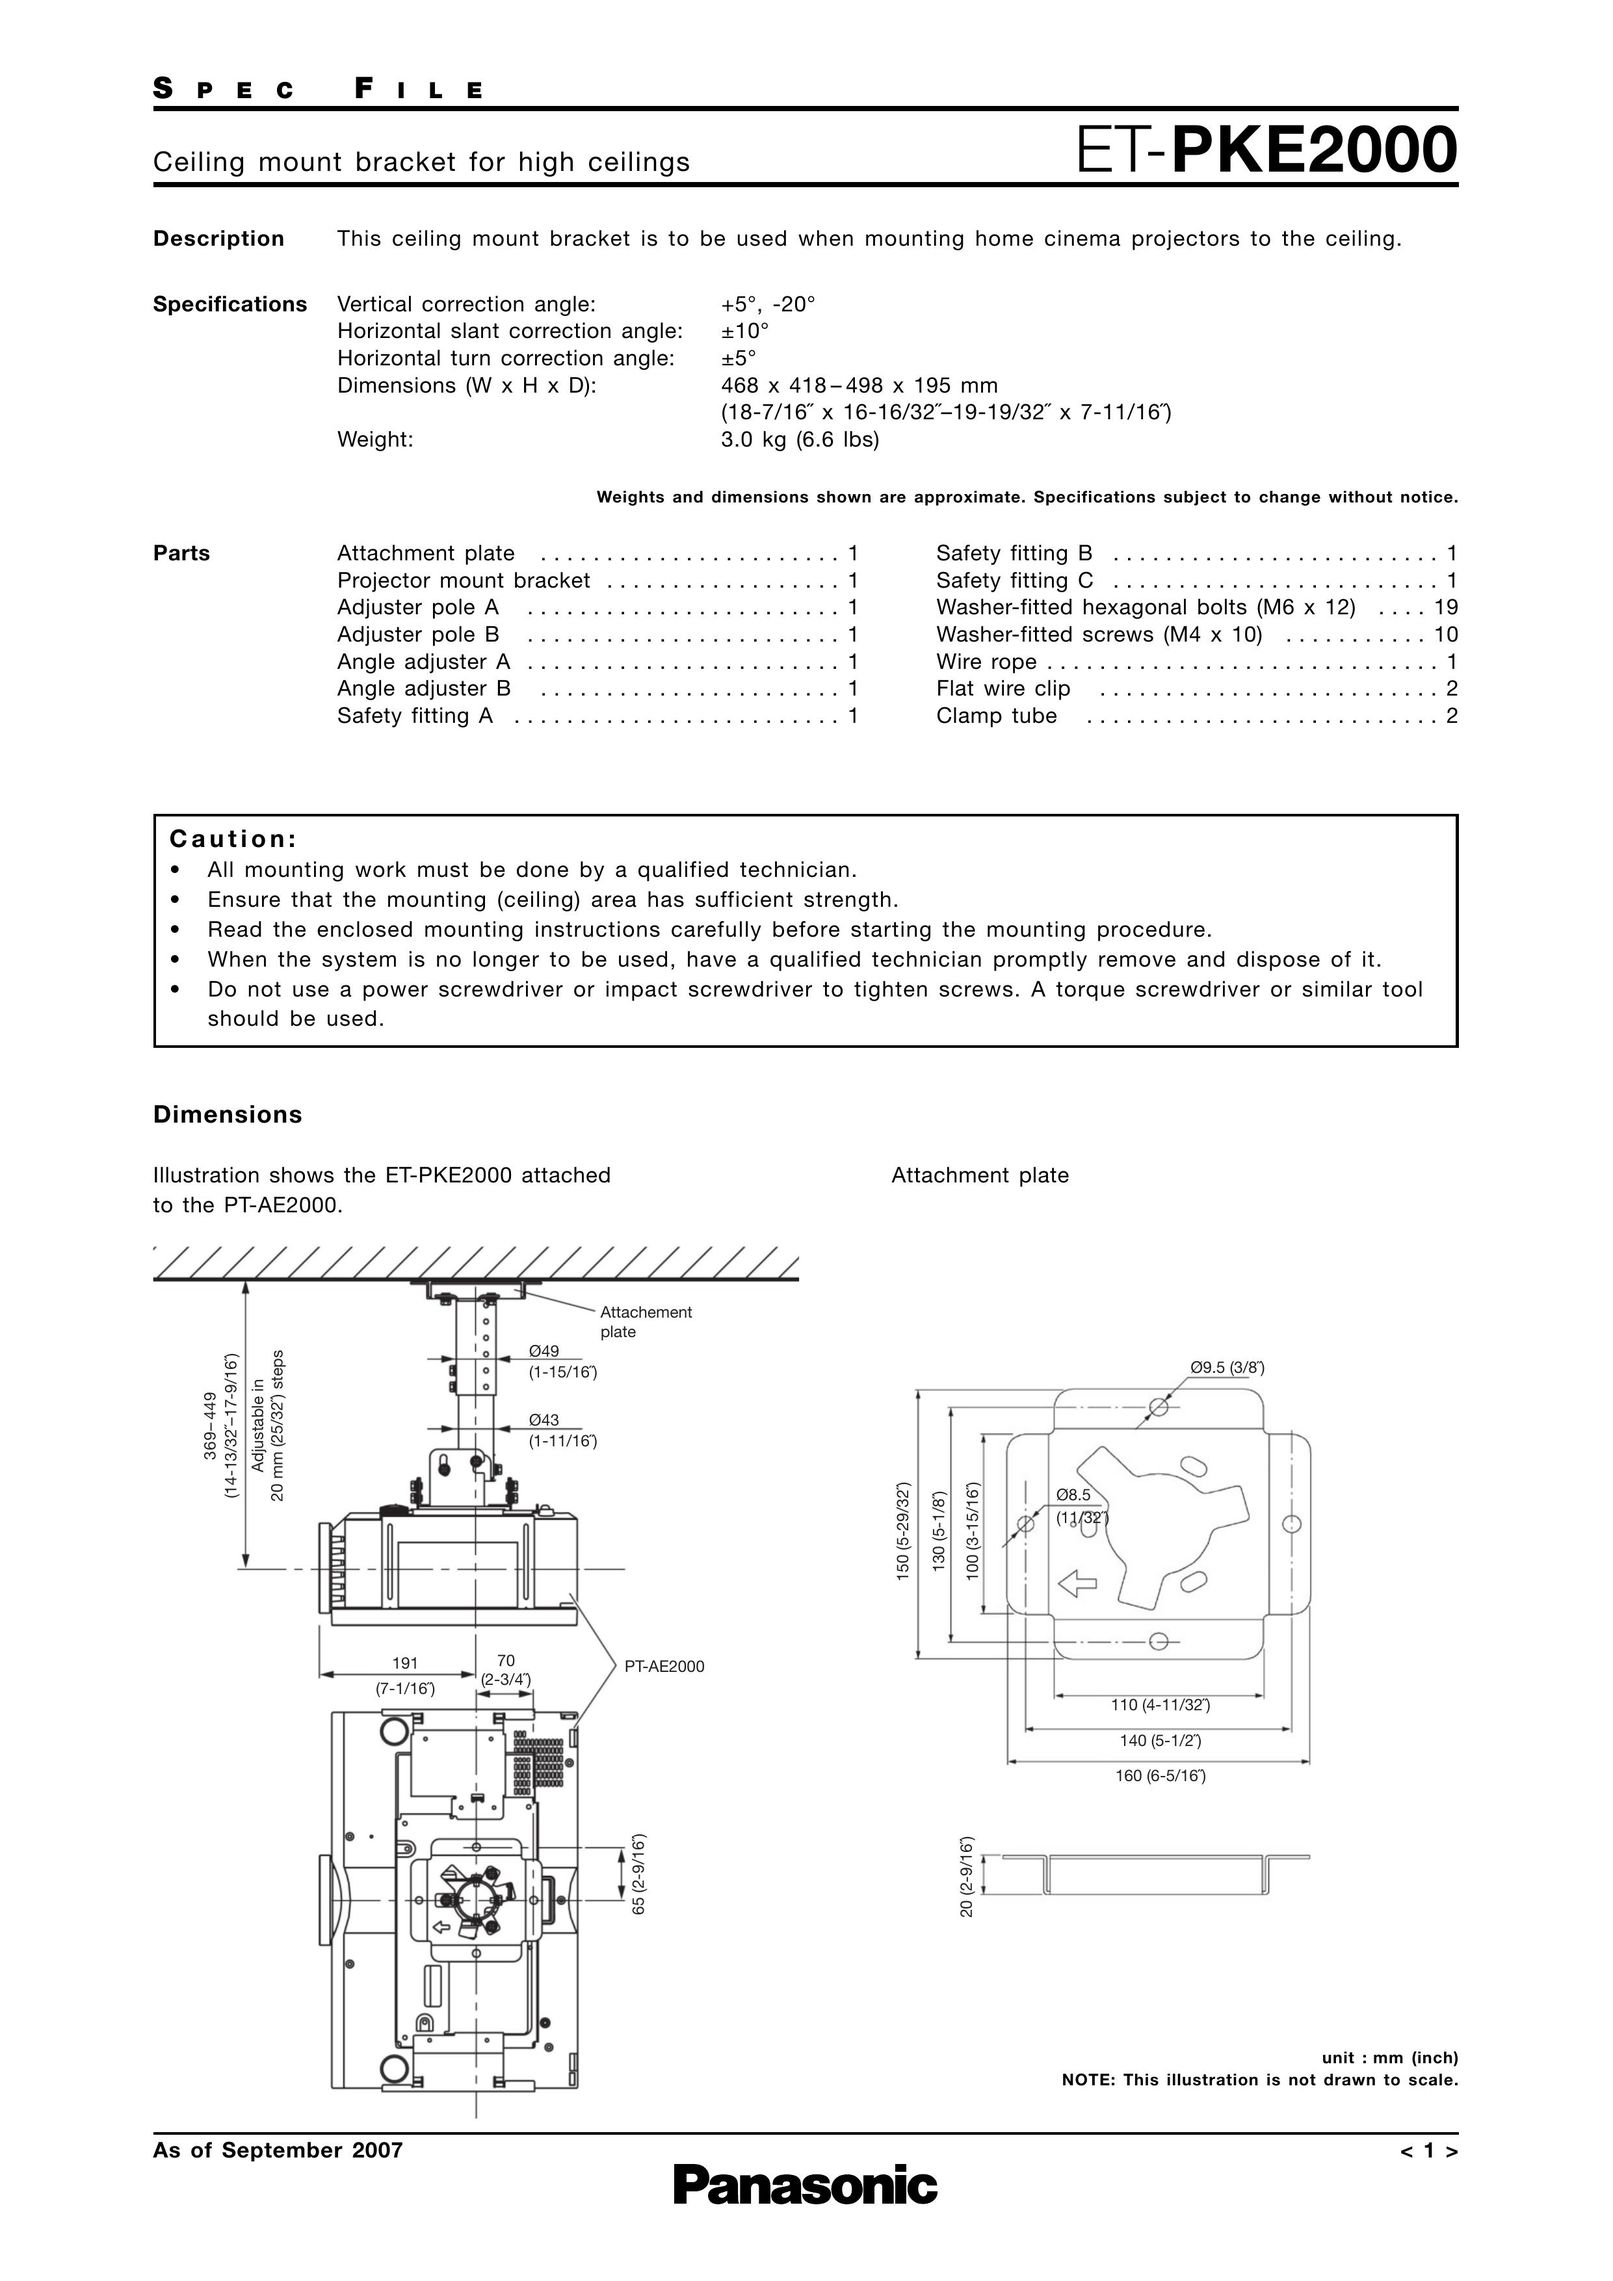 Panasonic ET-PKE2000 Projector User Manual